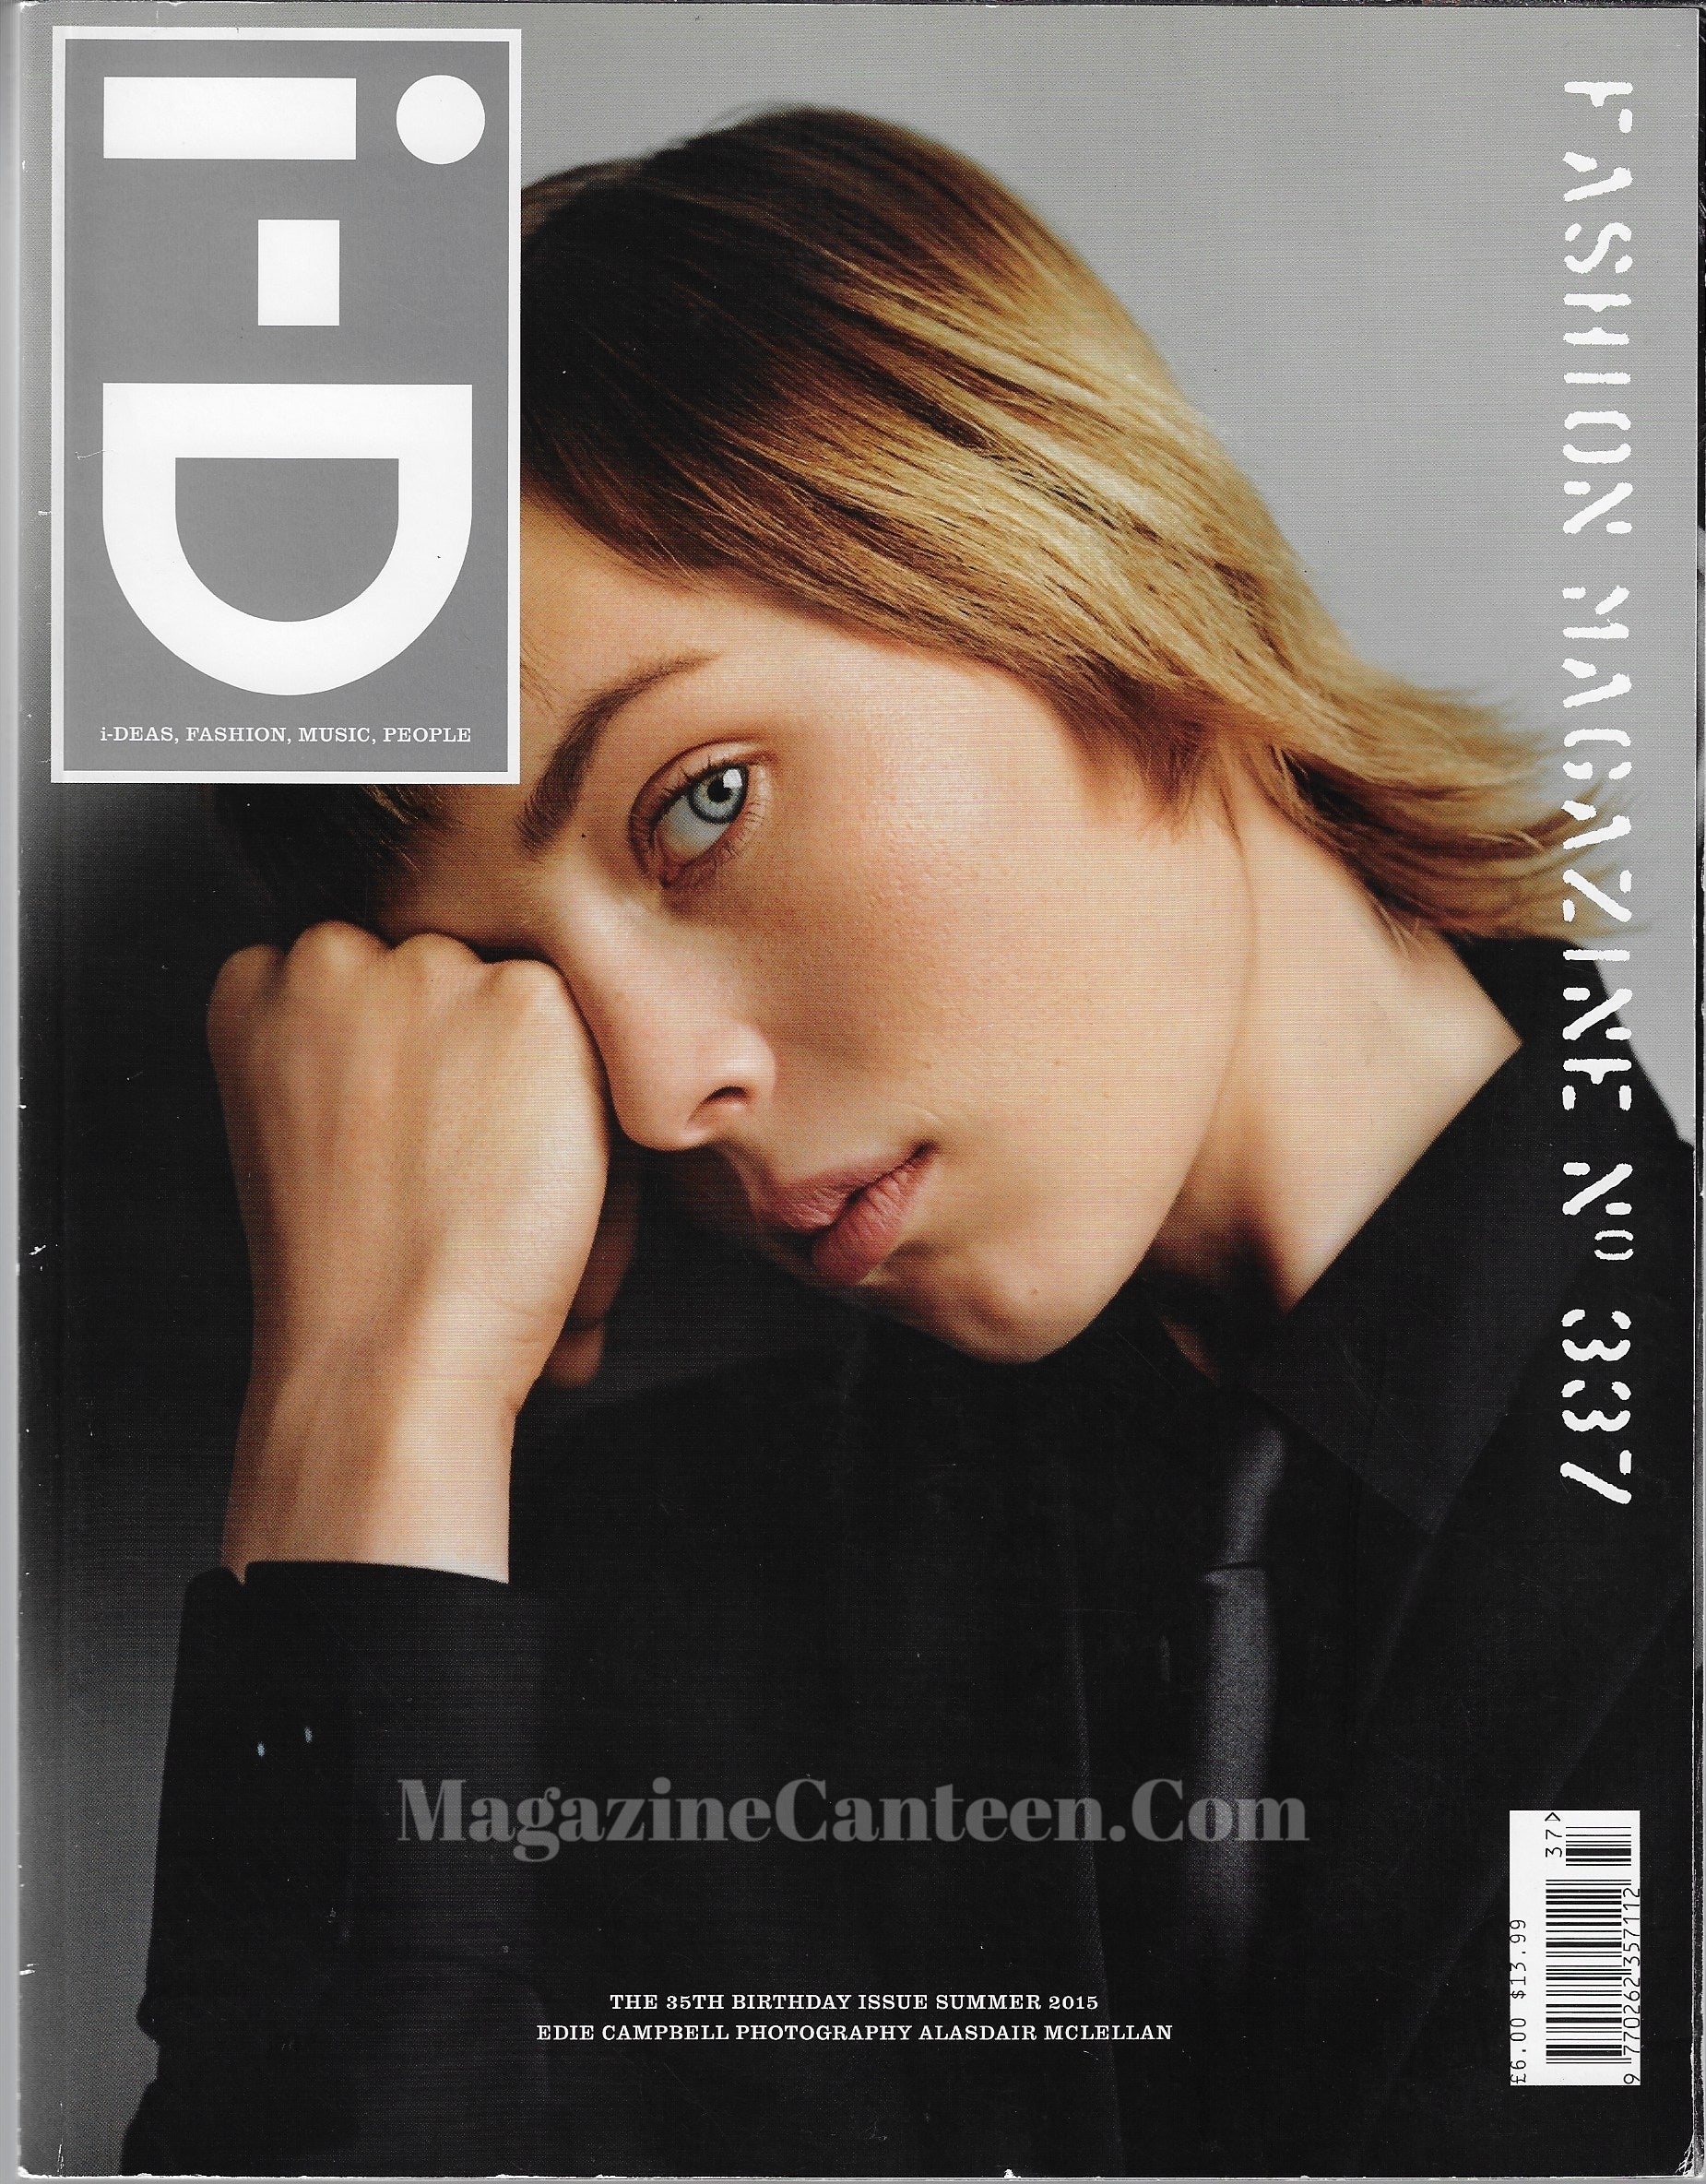 I-D Magazine 337 - Edie Campbell 2015